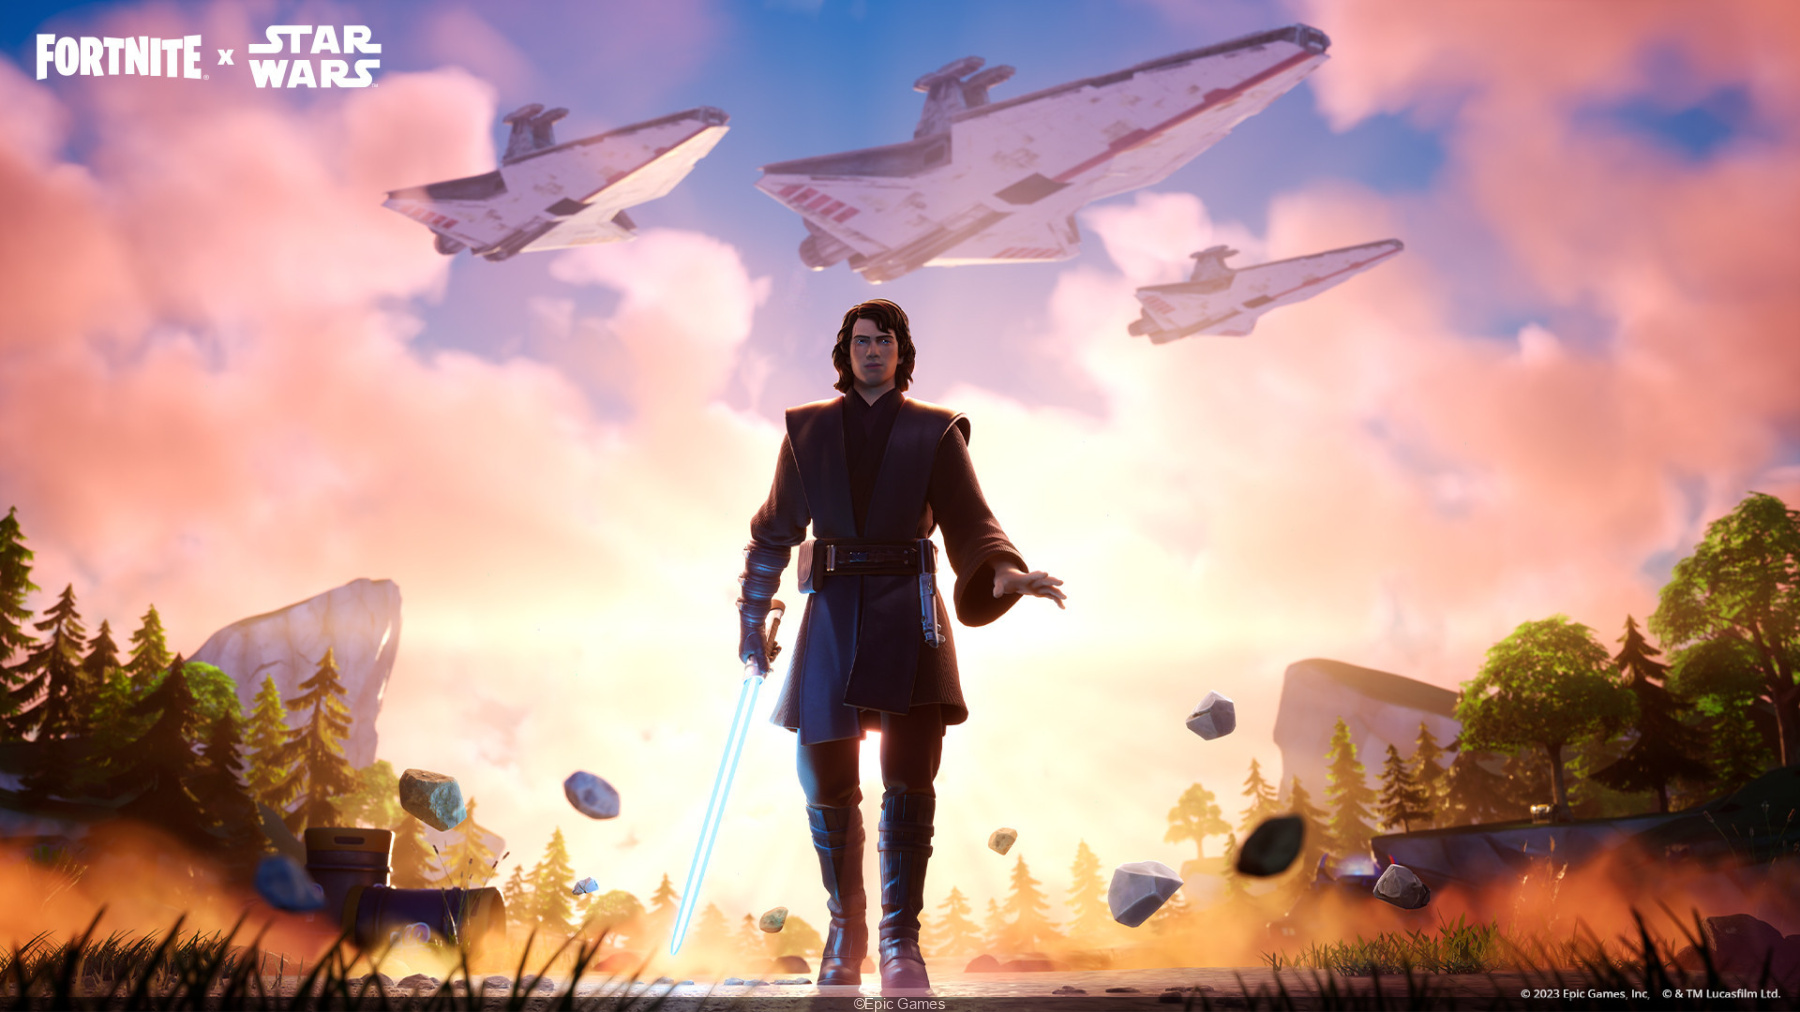 Fortnite x Star Wars Anakin Skywalker lands in the Battle Royale